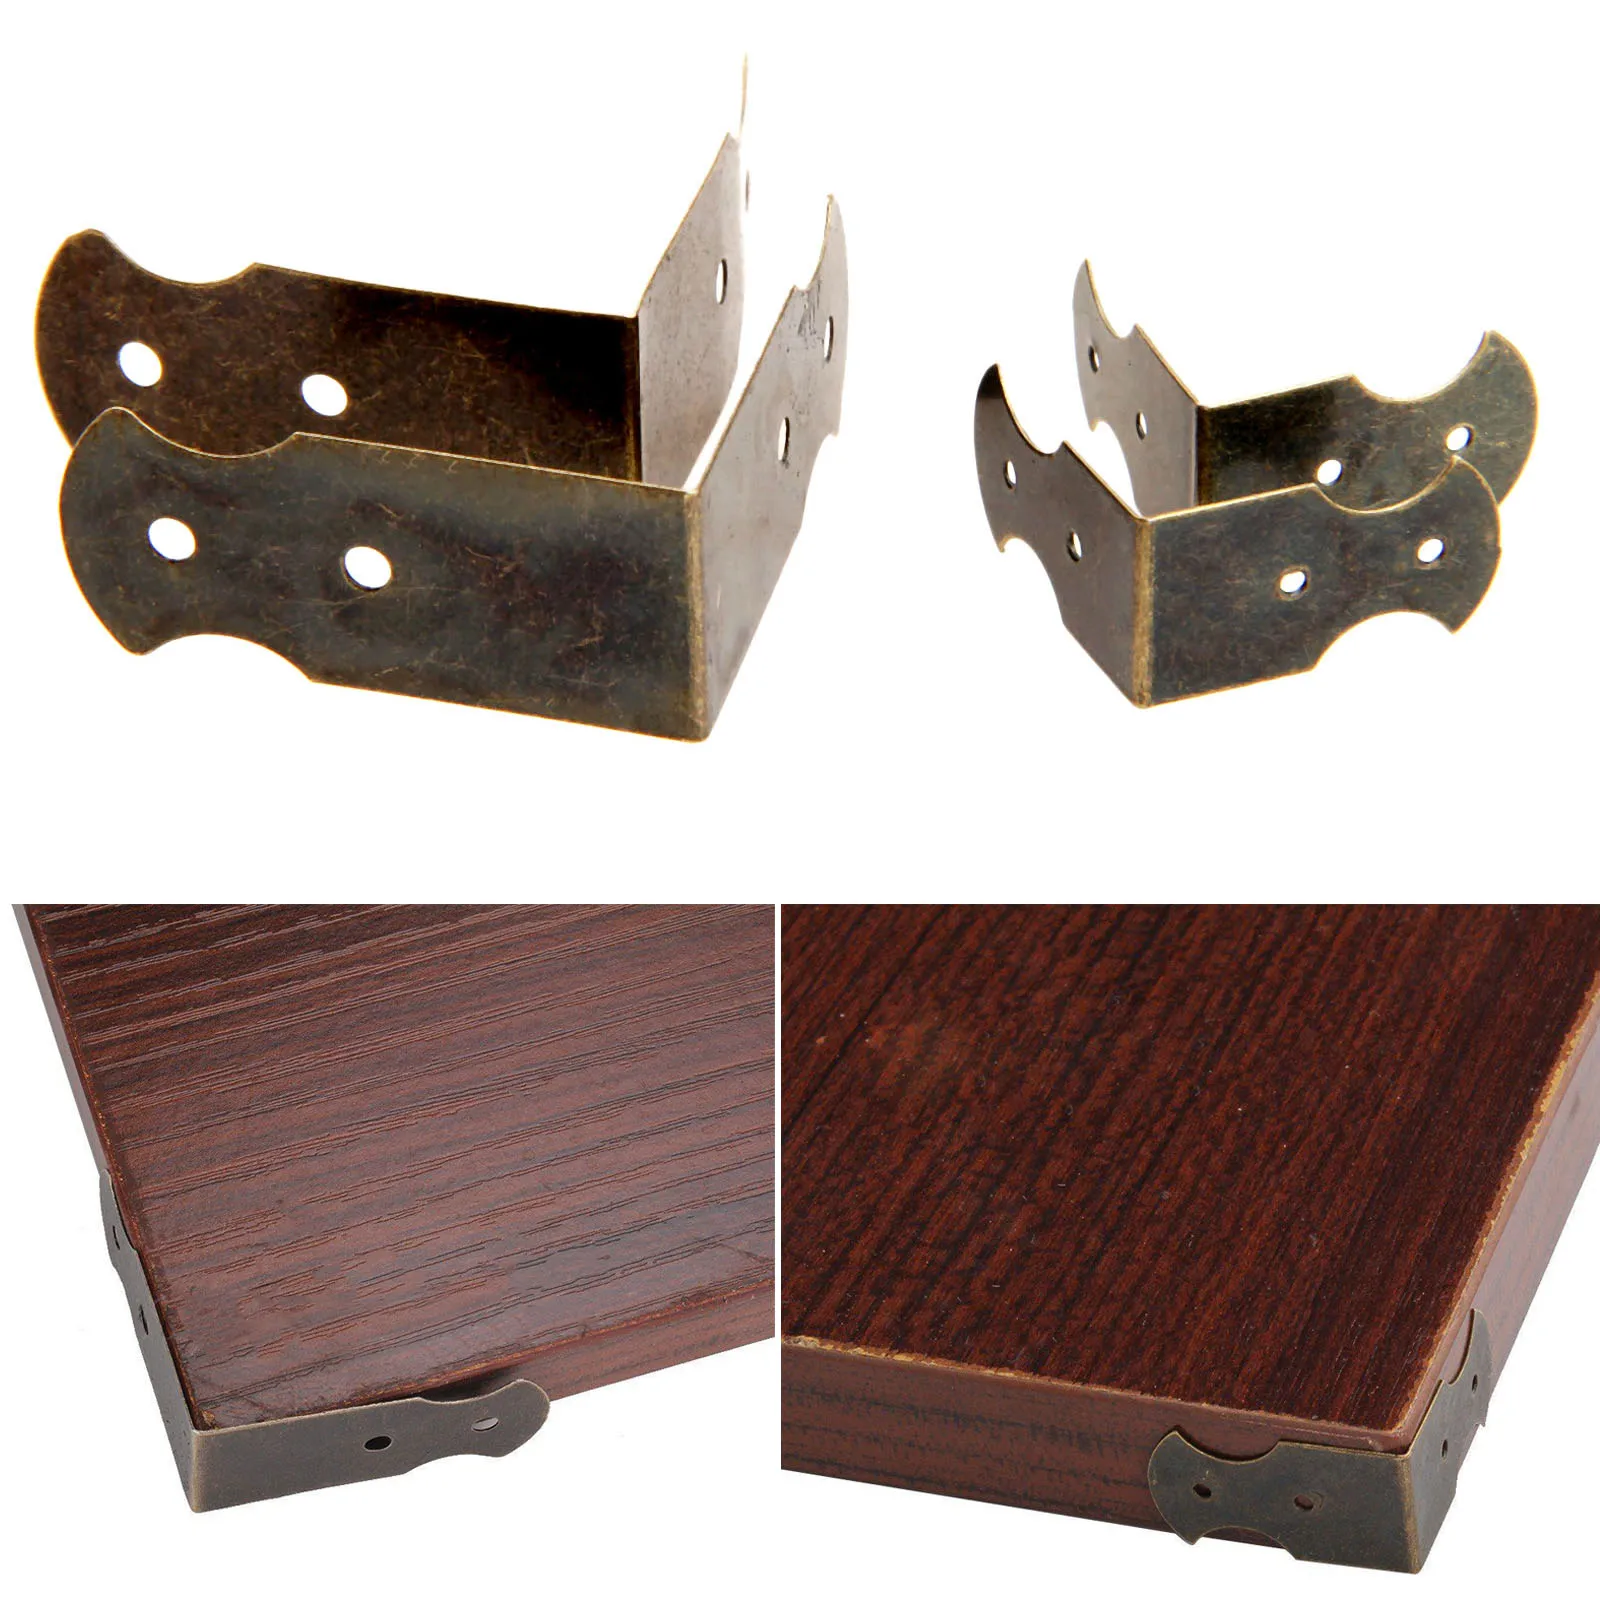 4 Fashion Jewelry Box Decorative Wood Gift Case Furniture Corner Protector Guard